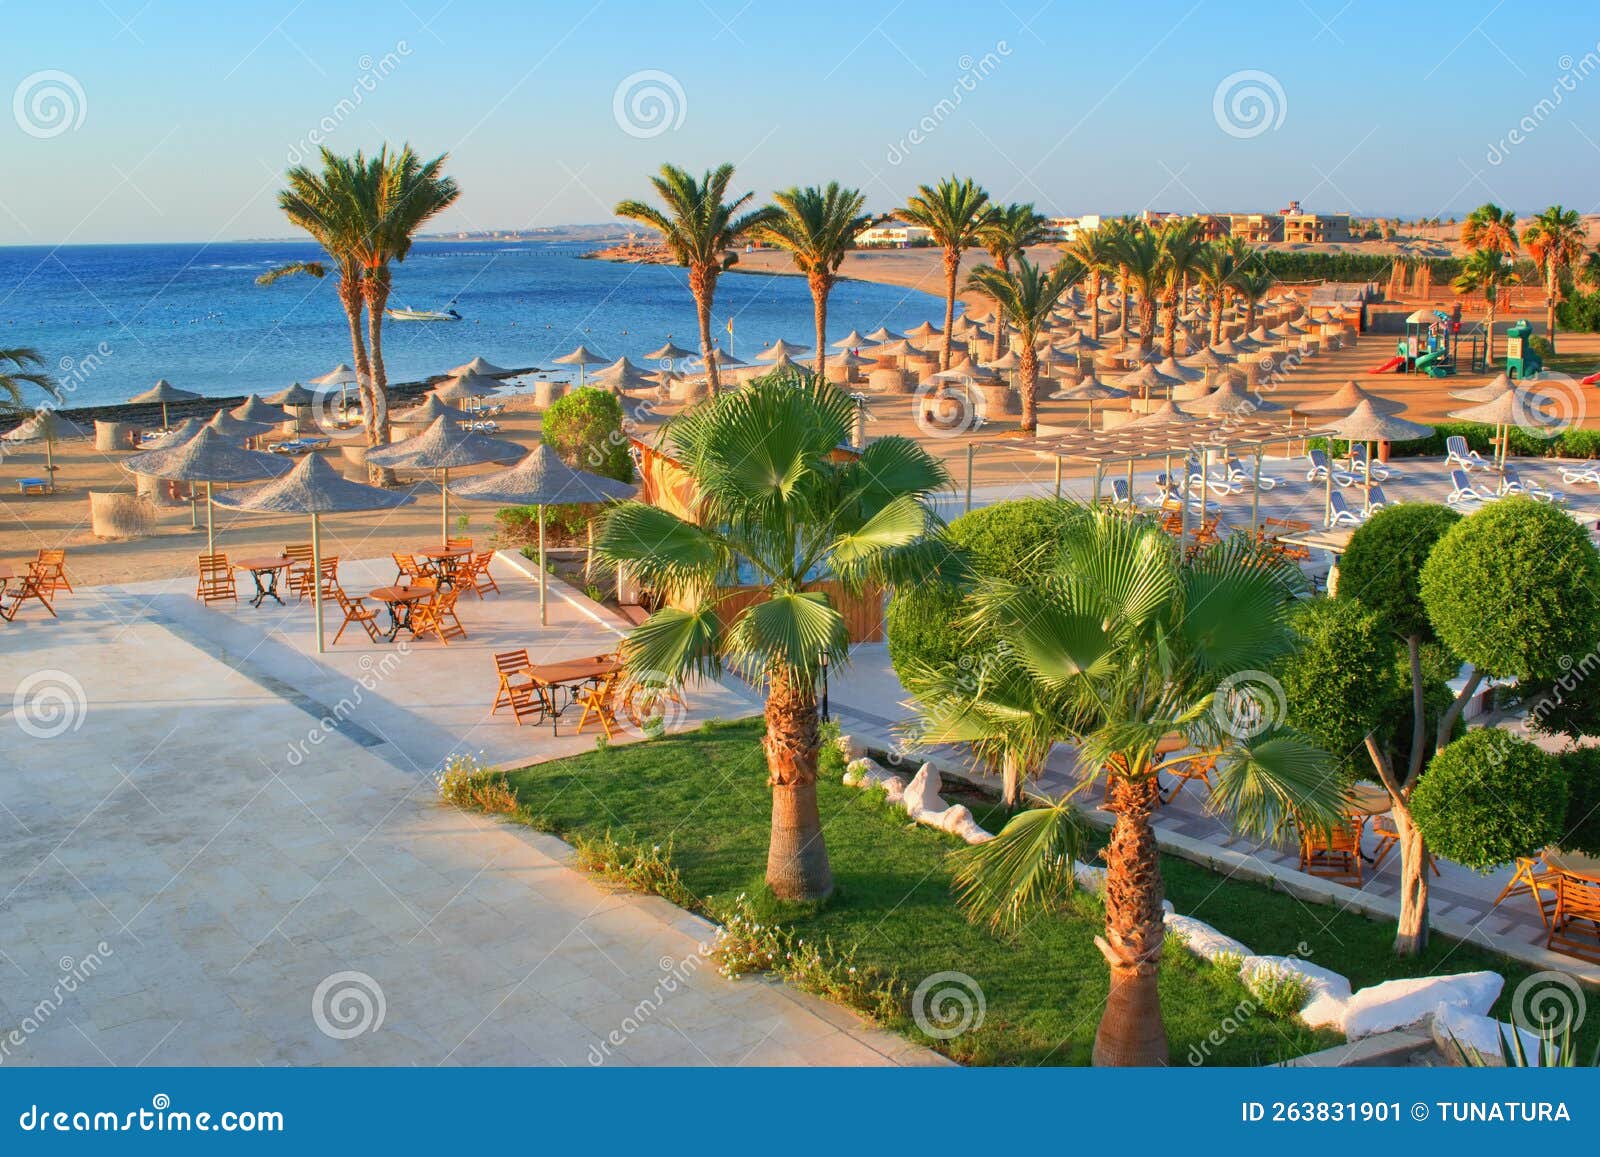 idylic beach with palms and sun umbrelas, red sea, egypt